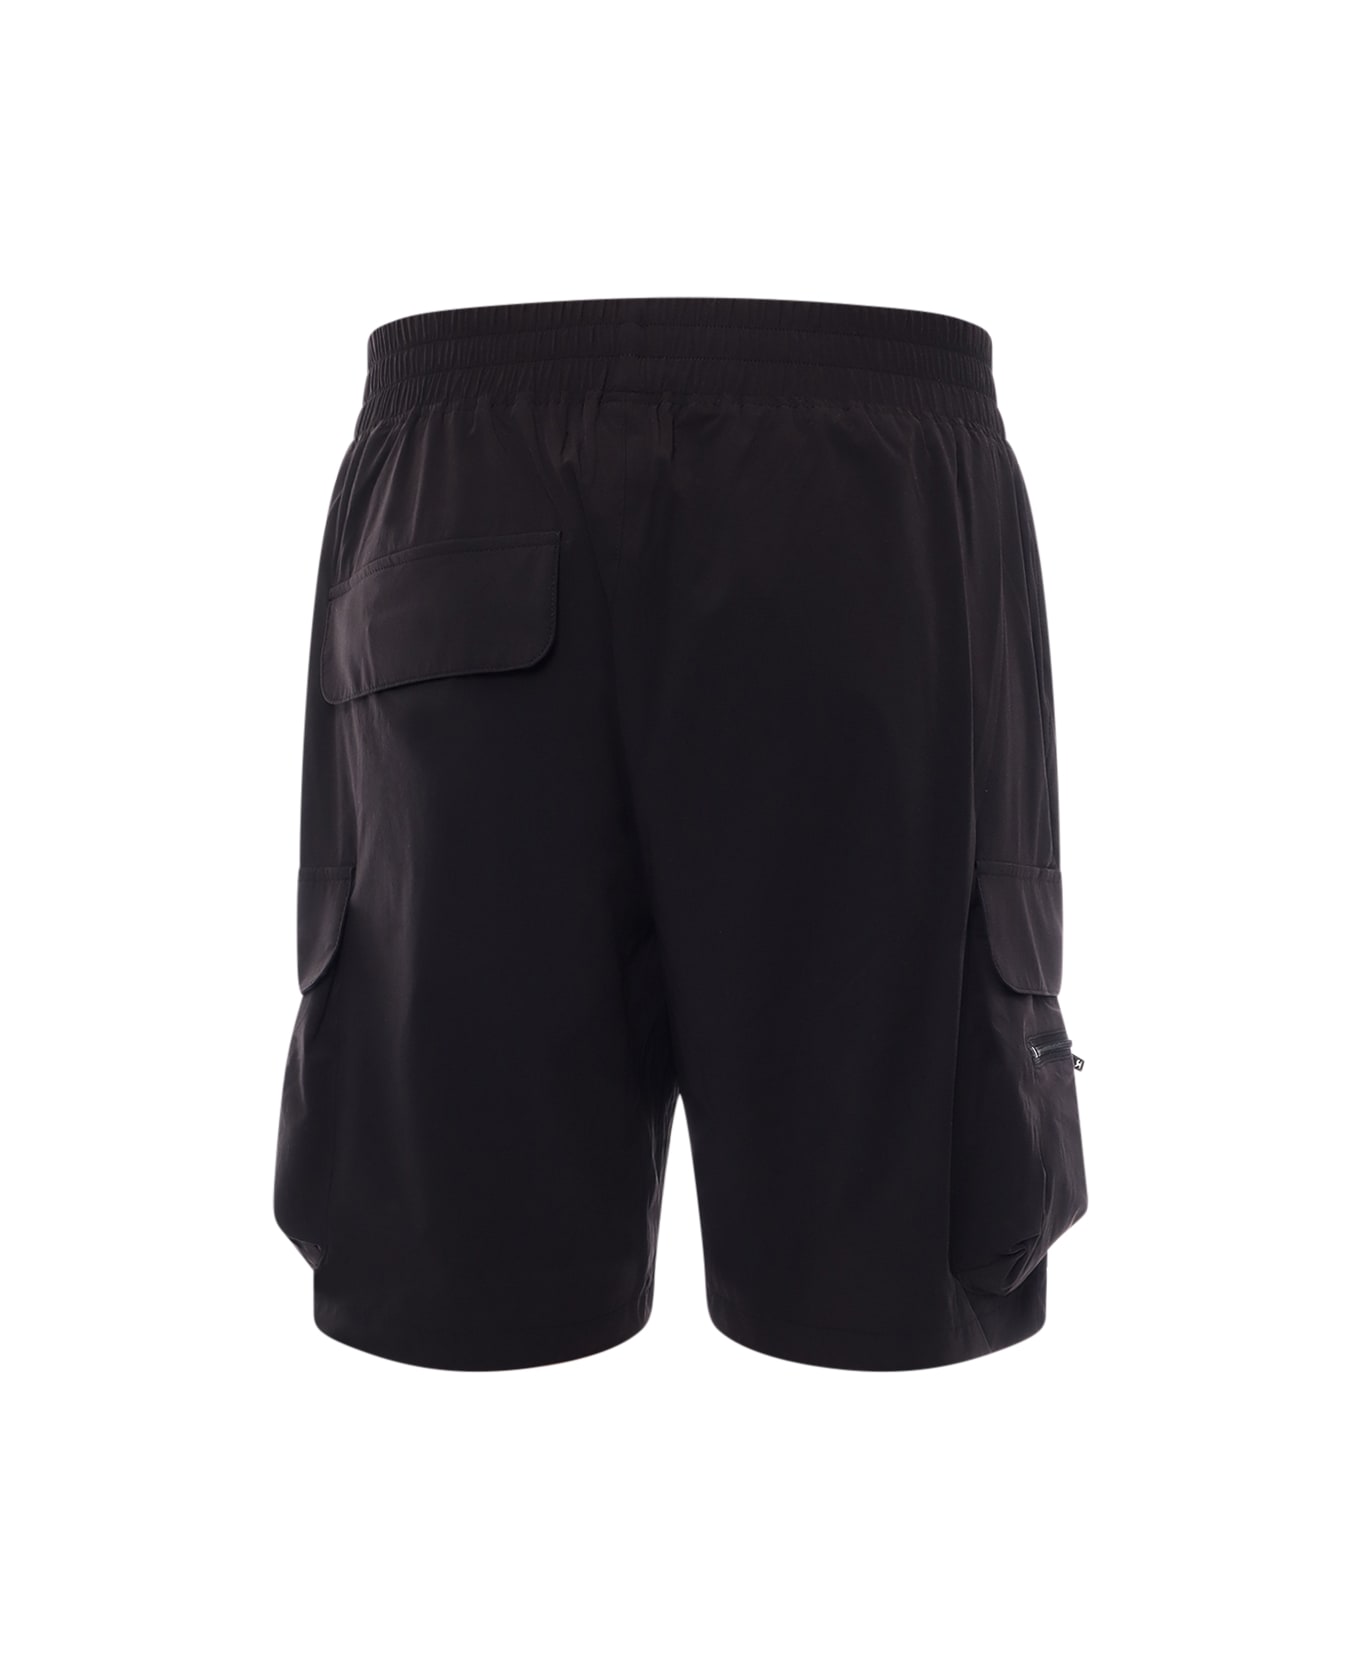 REPRESENT Bermuda Shorts - Black ショートパンツ